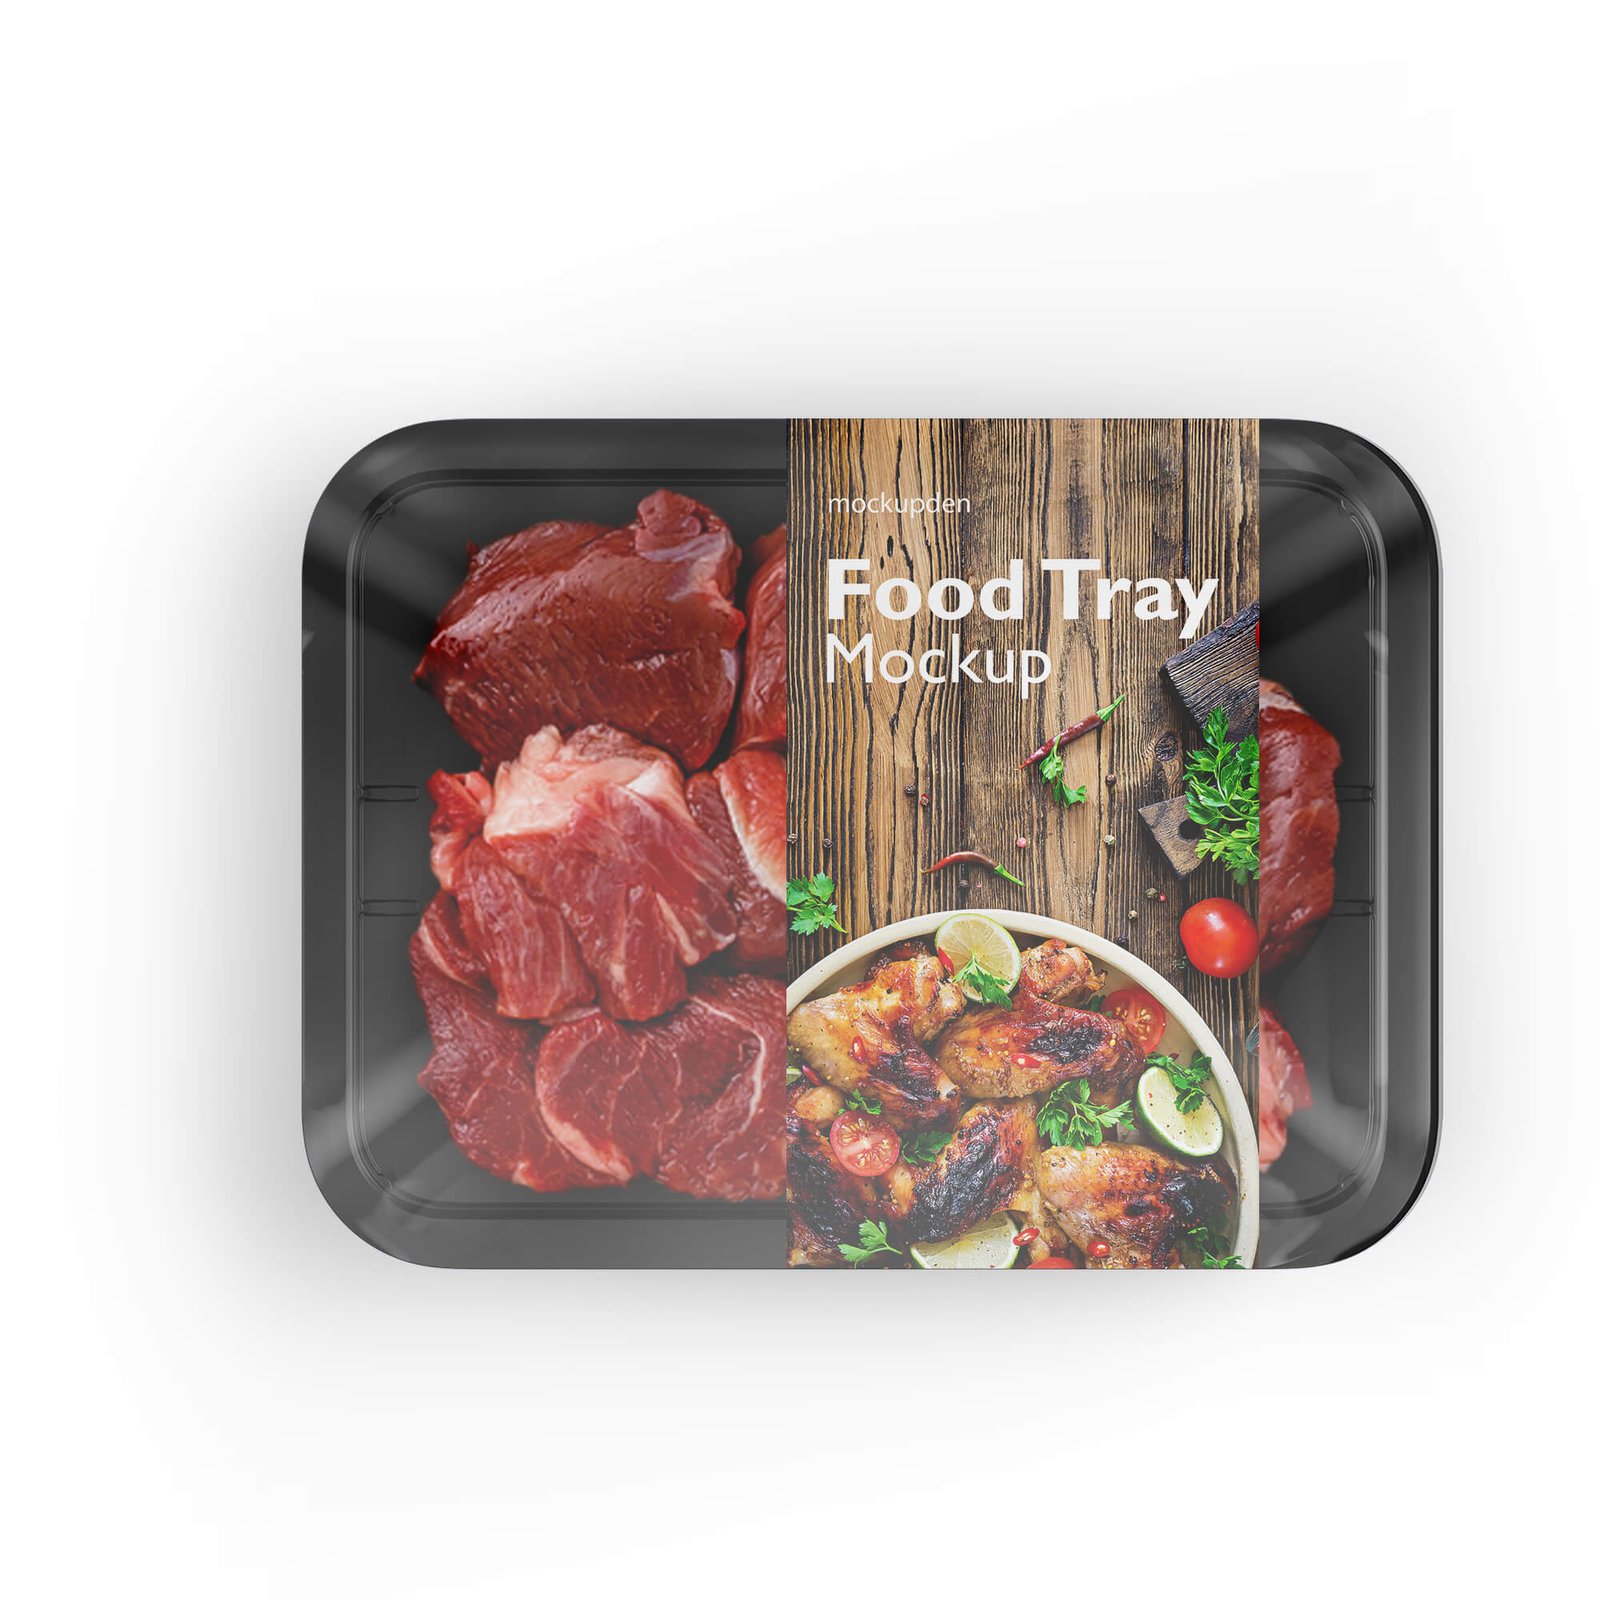 Design Free Food Tray Mockup PSD Template